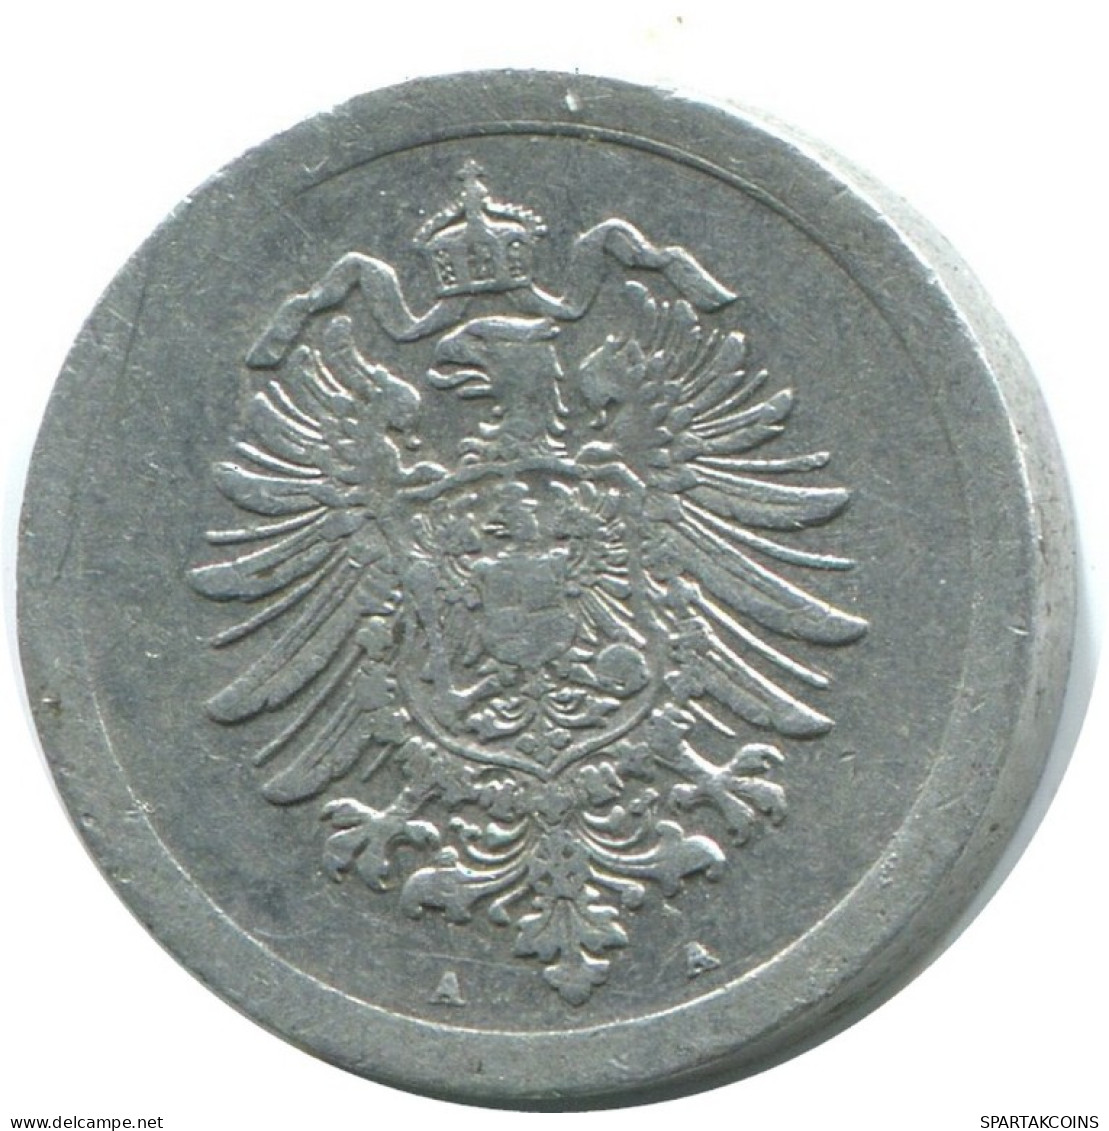 1 PFENNIG 1917 A ERSATZMÜNZEN ALEMANIA Moneda GERMANY #AD427.9.E.A - 1 Pfennig